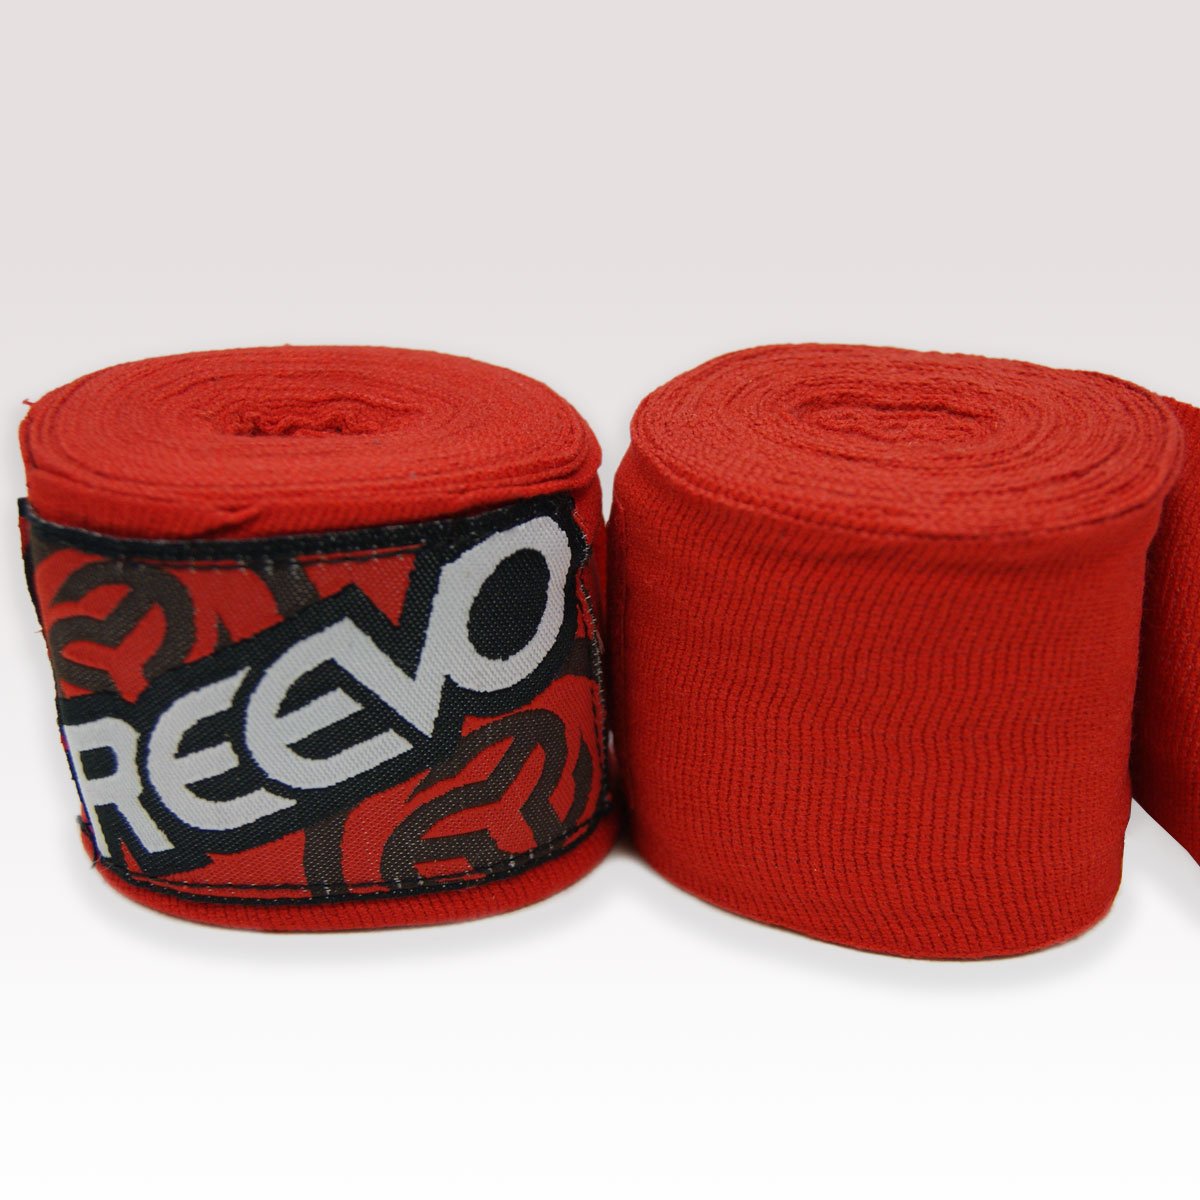 Custom Reevo Handwraps